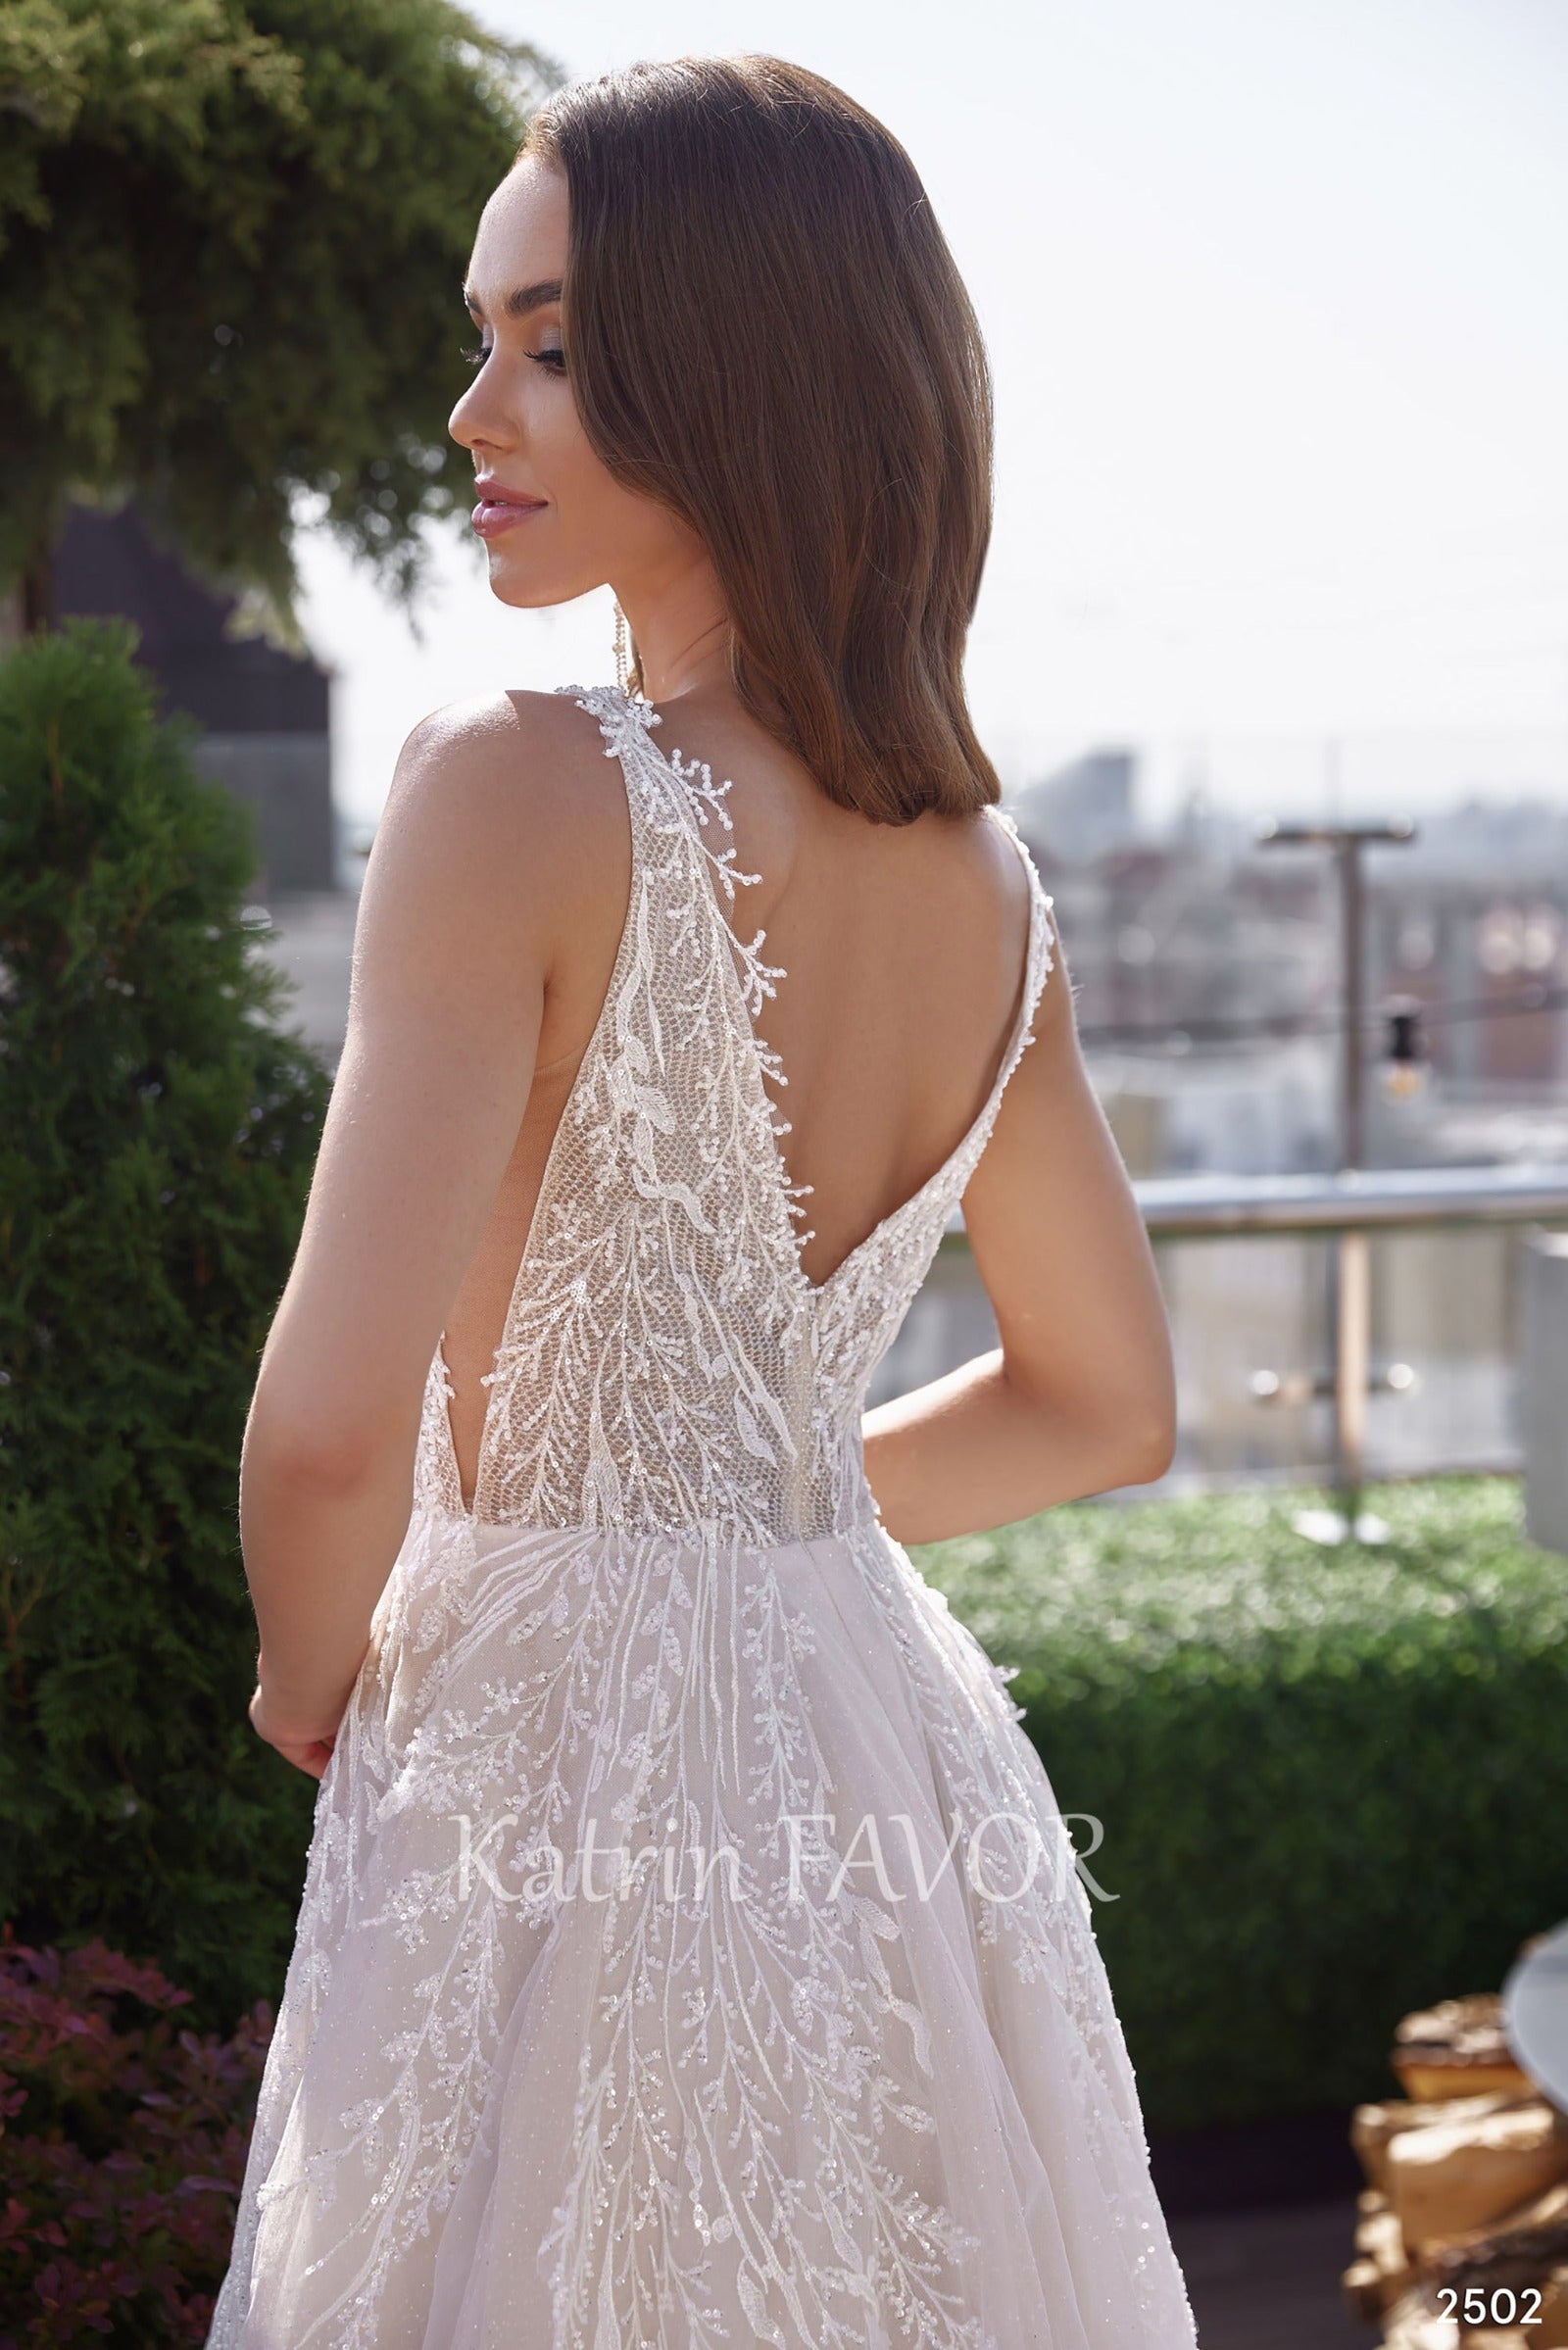 KatrinFAVORboutique-Blush tulle a-line beach wedding dress